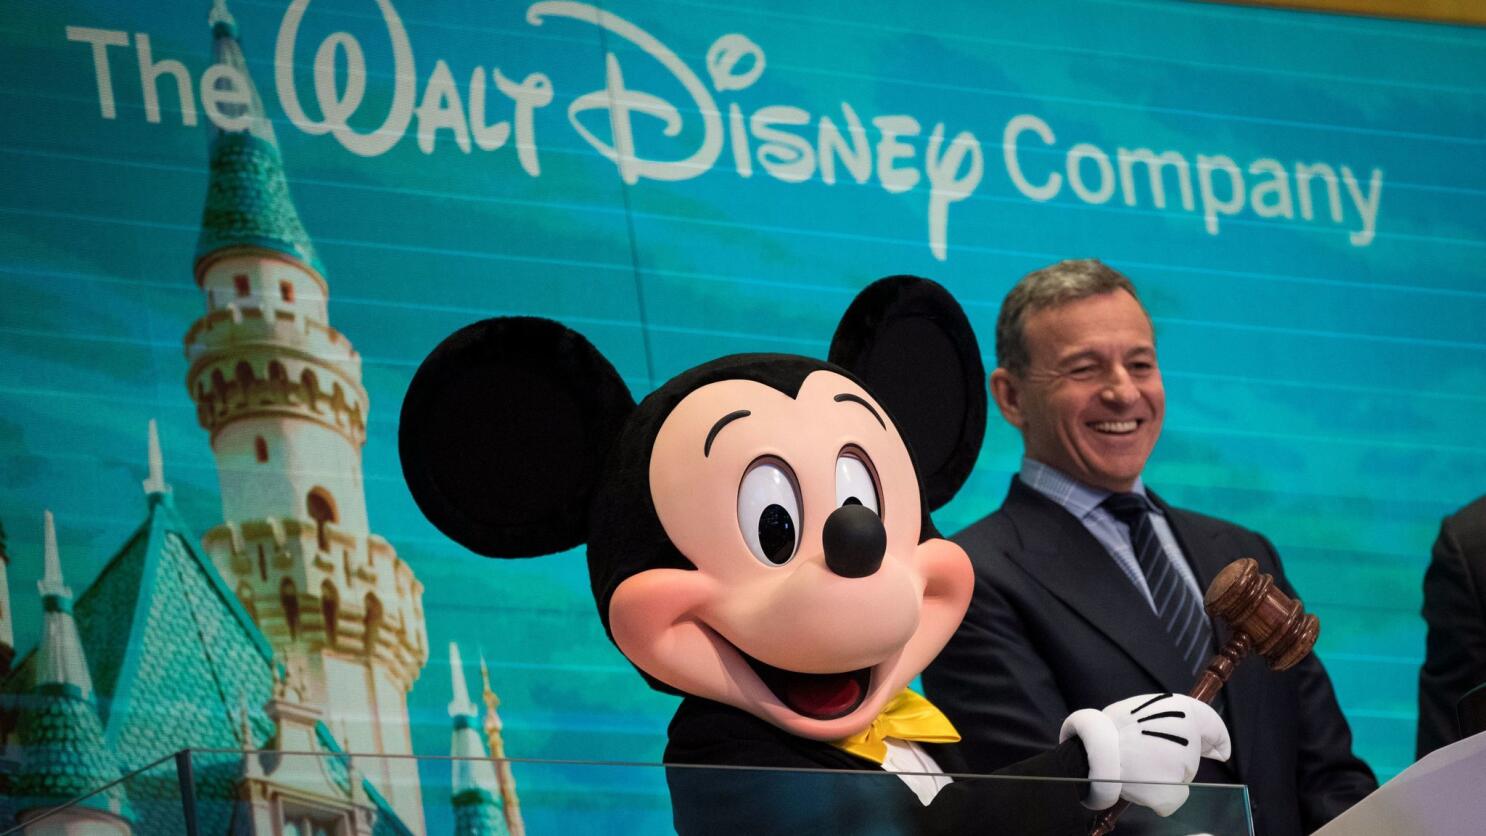 Disney Board Elects Oracle's Safra Catz and Illumina's Francis A. deSouza  as Directors